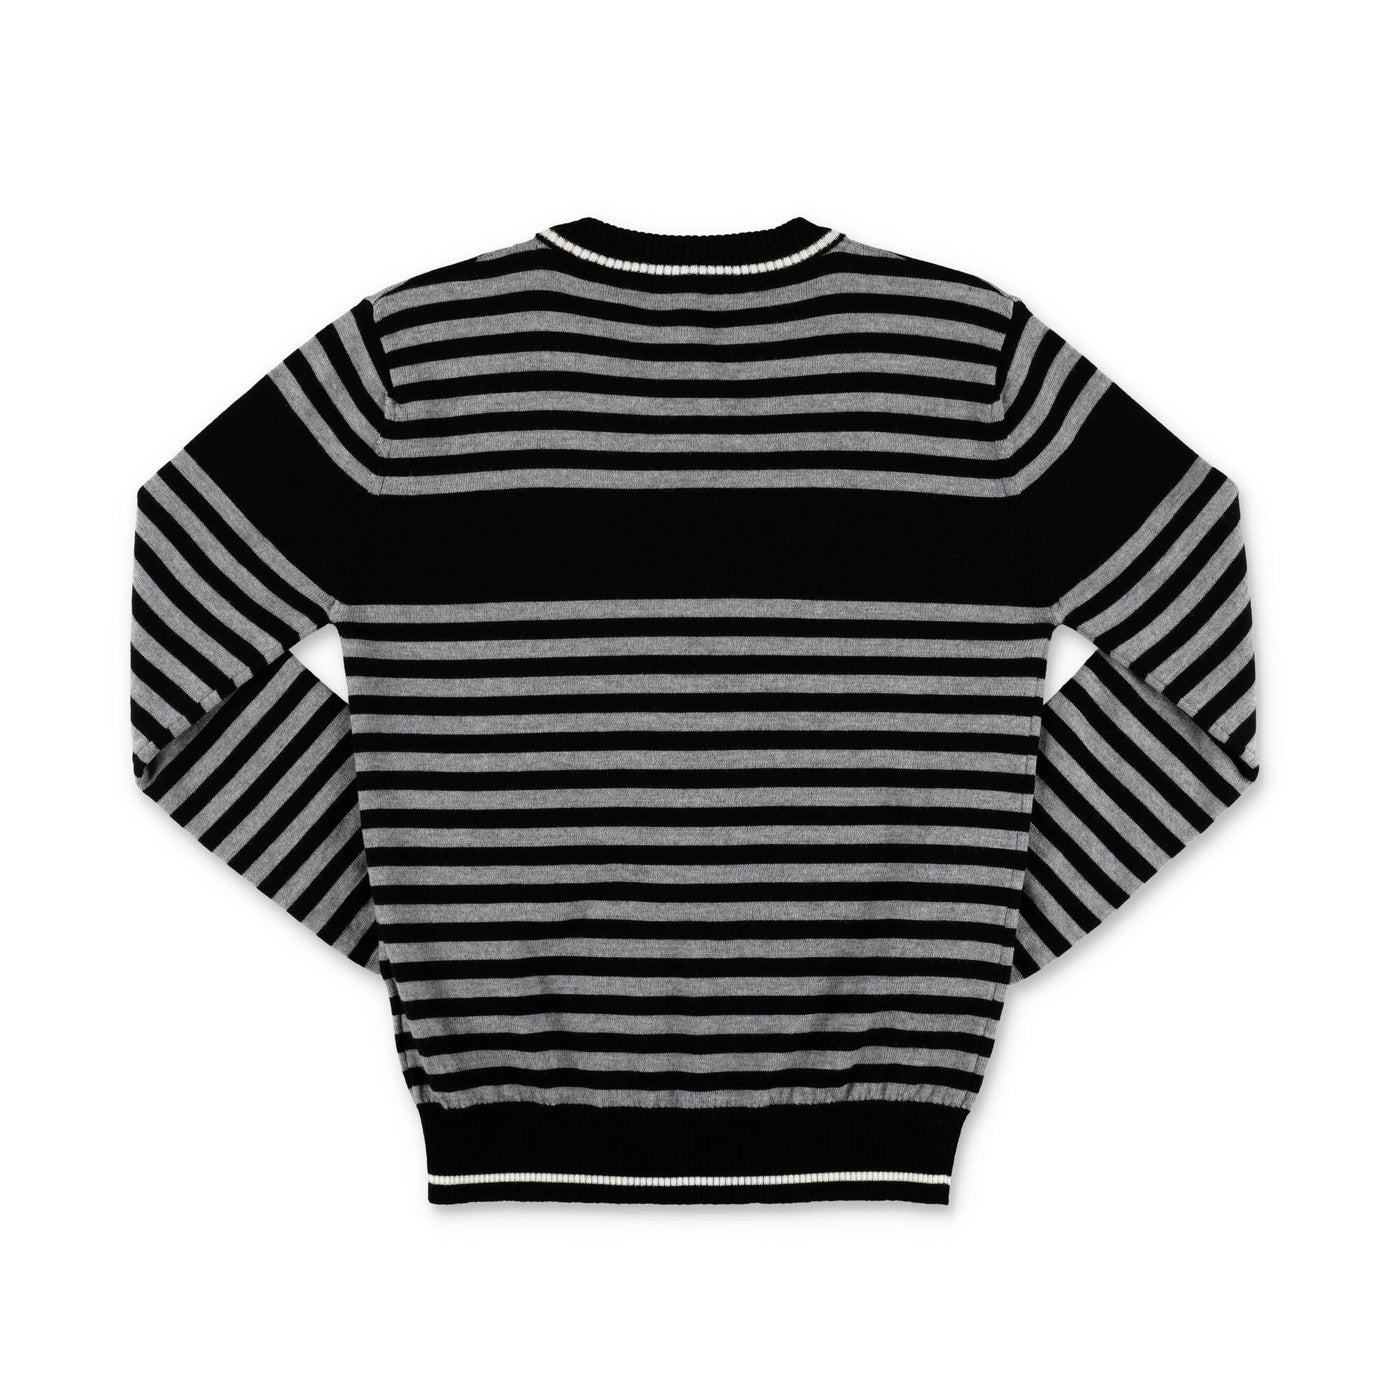 Grey and black stripes virgin wool boy BALMAIN jumper - Carofiglio Junior